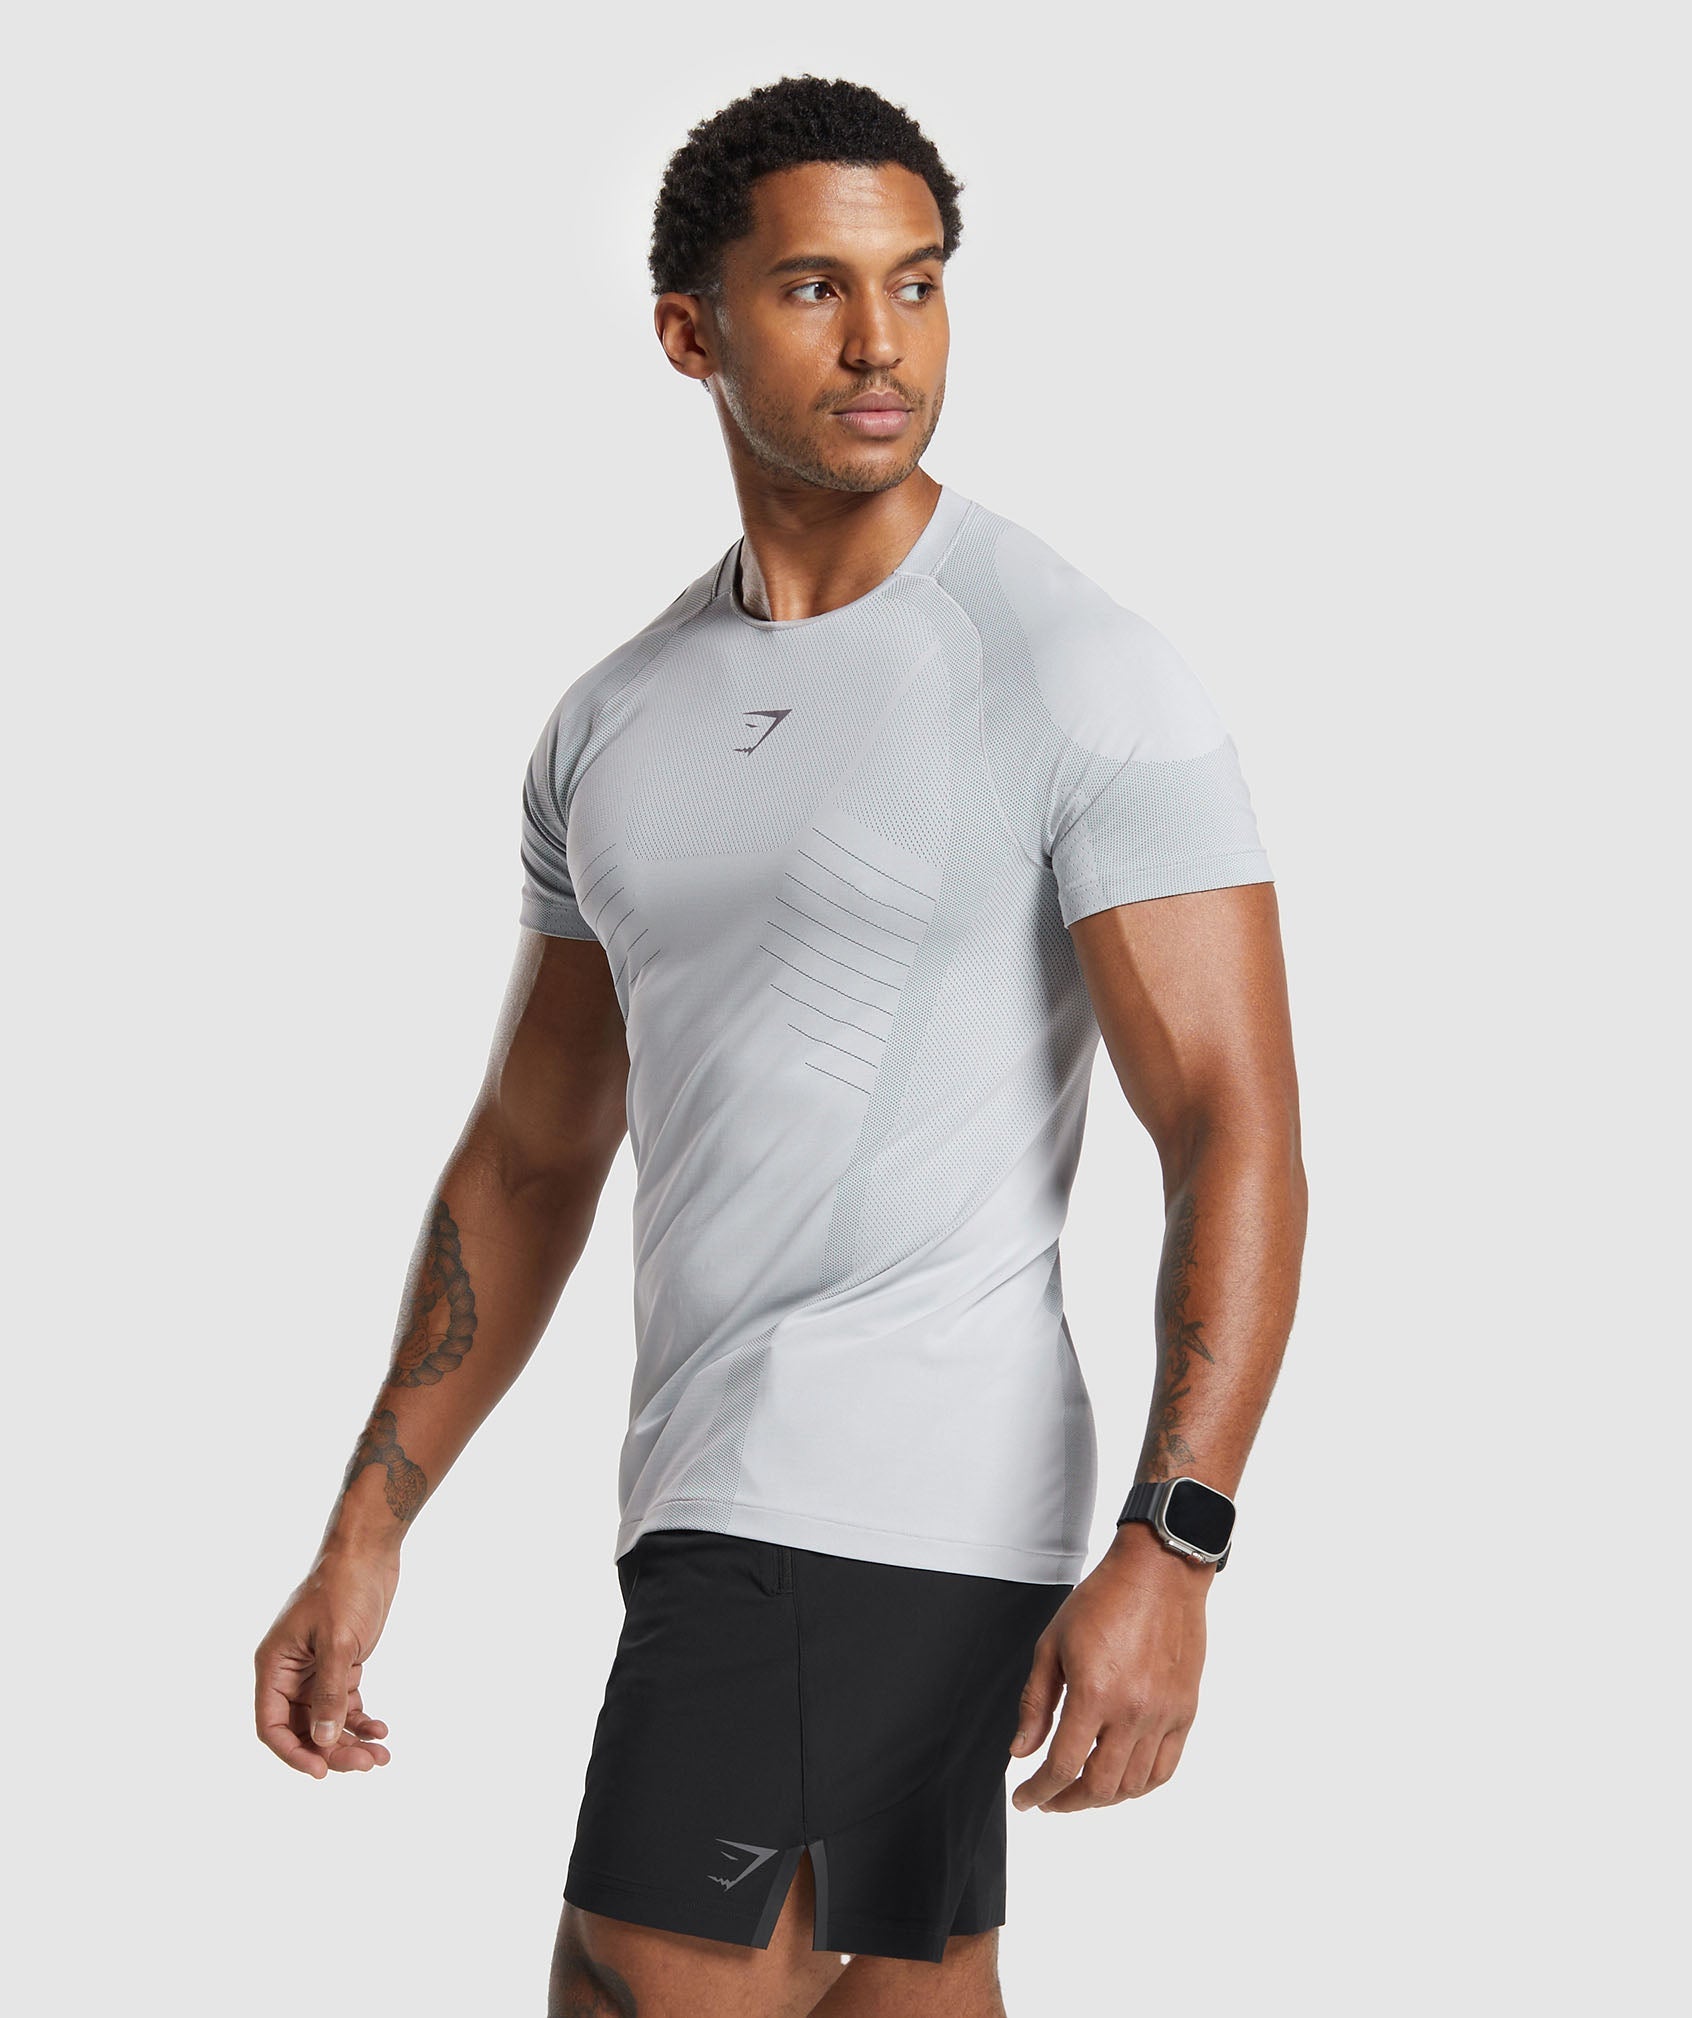 Apex Seamless T-Shirt in Light Grey/Medium Grey - view 3